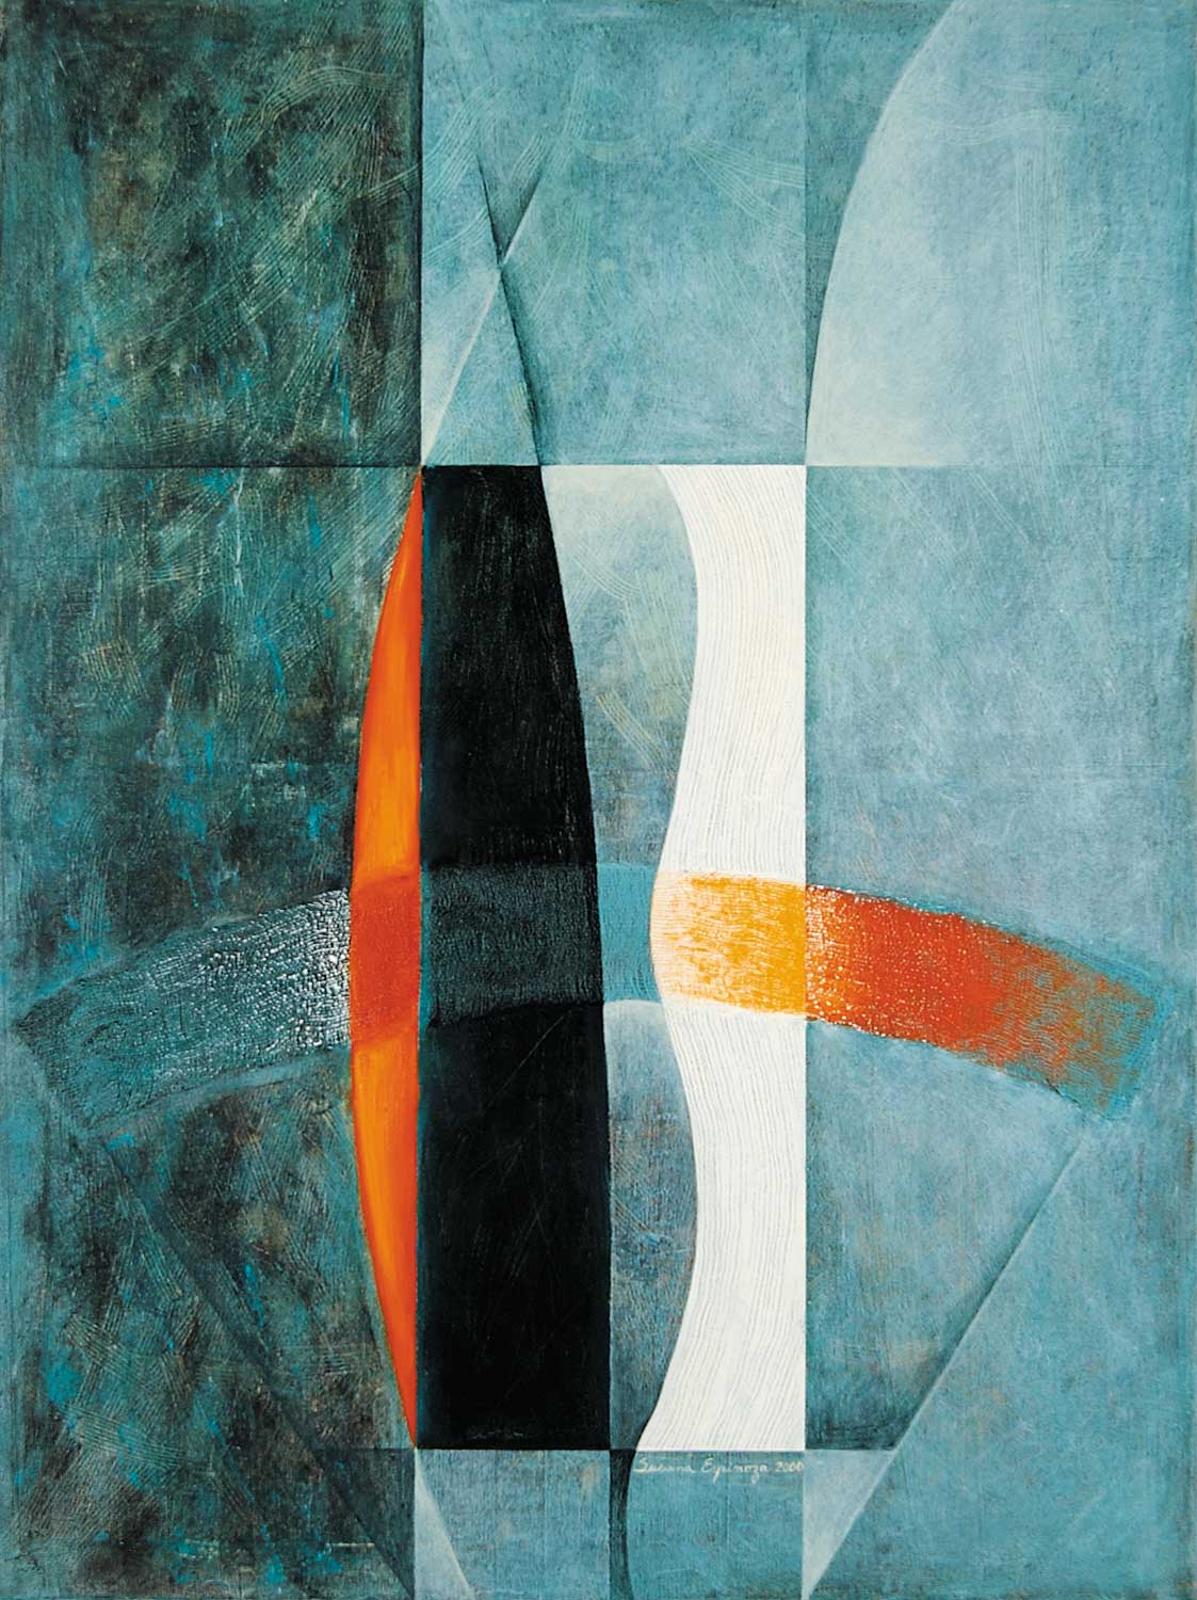 Susana Espinoza (1954) - Texture Composition #3